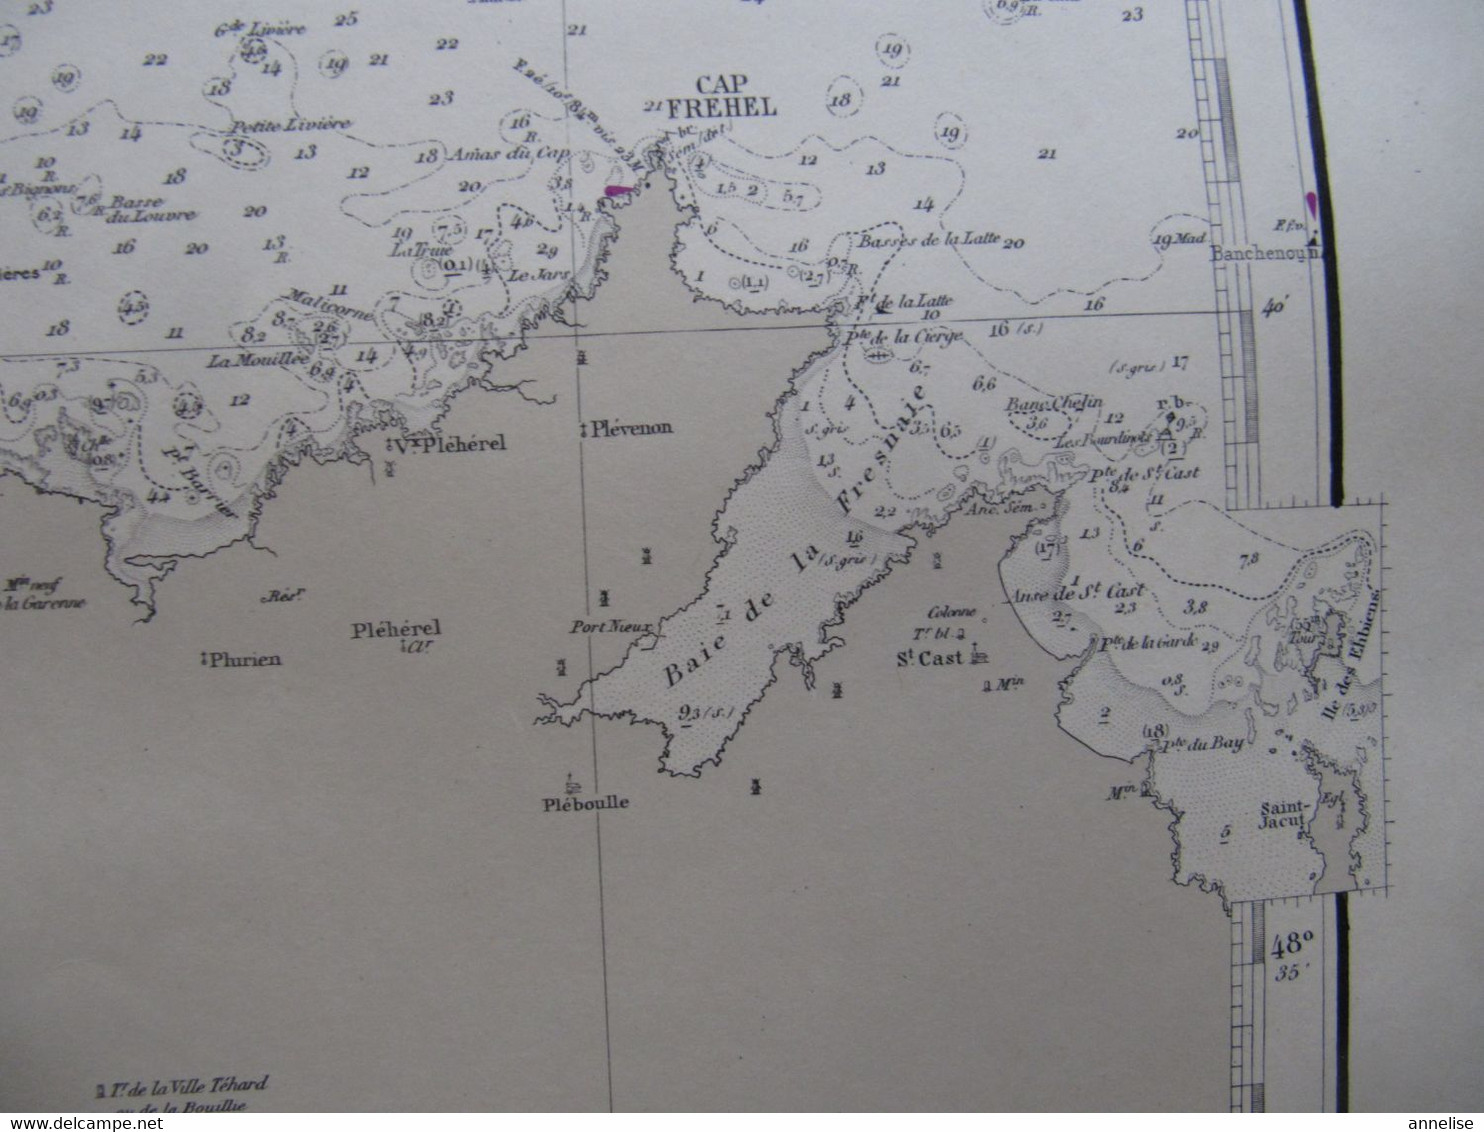 Carte marine n°879 Ile de Bréhat au Cap Fréhel 22 1950